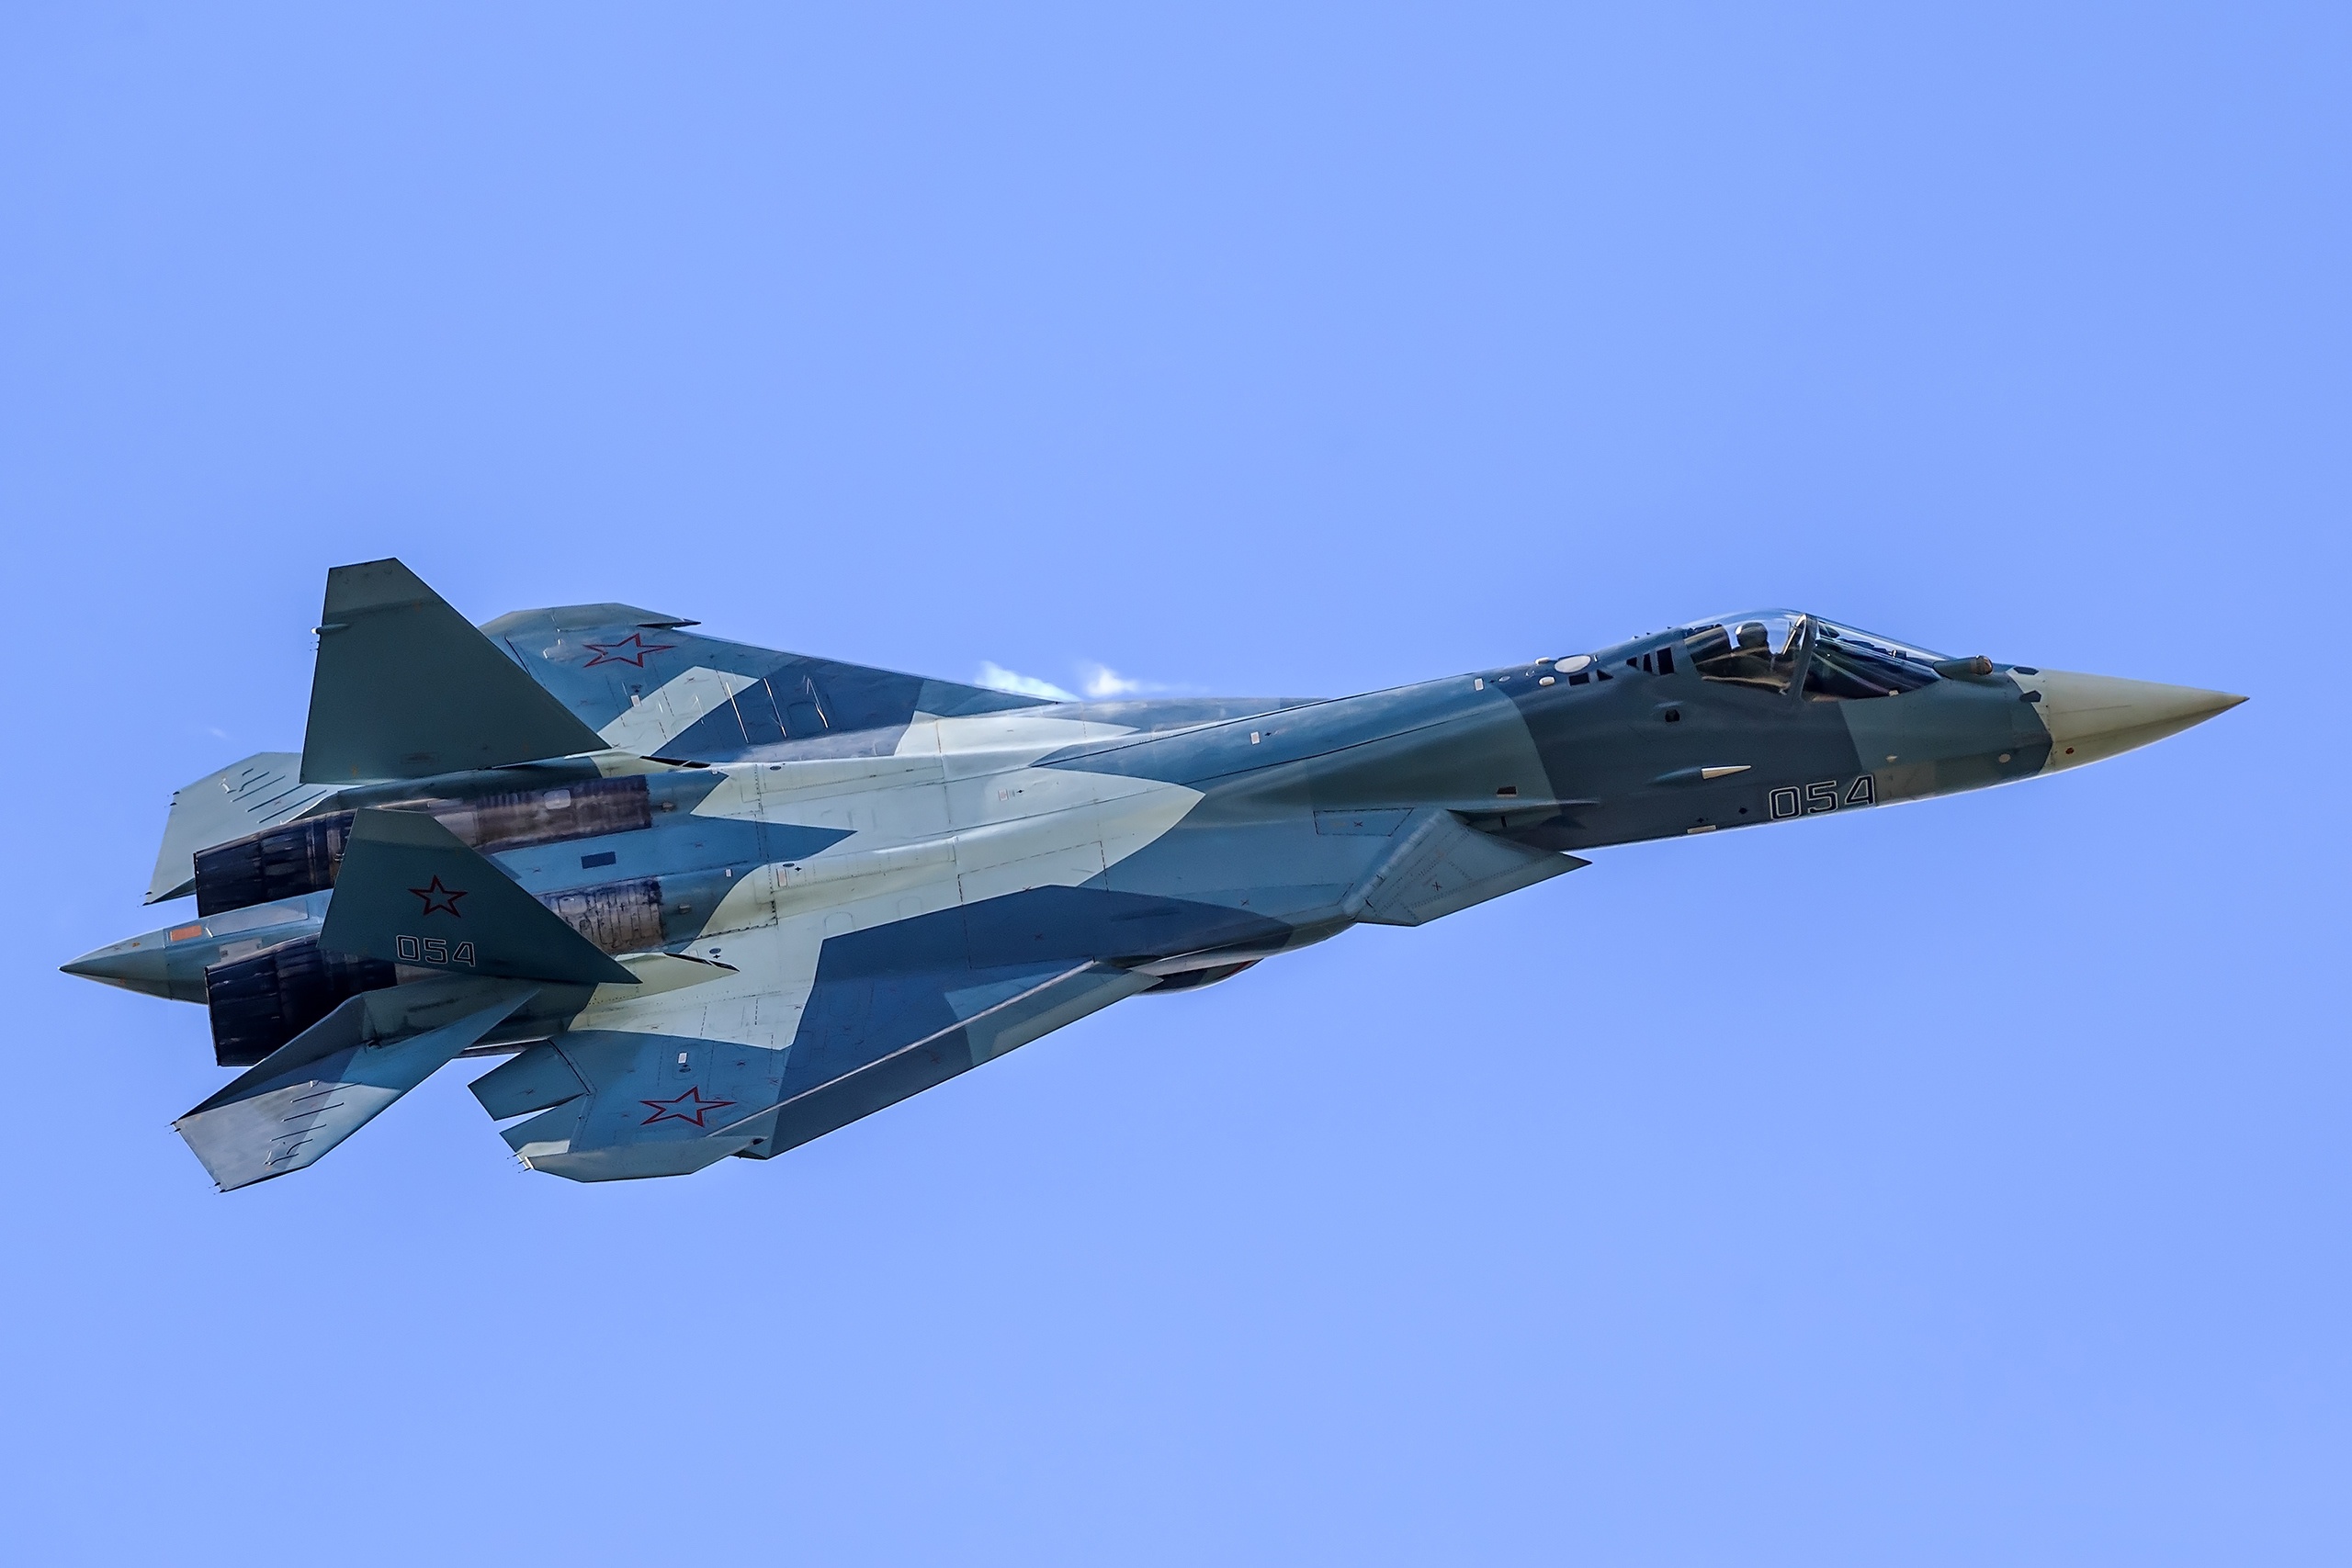 sukhoi su 57, military, aircraft, jet fighter, warplane, jet fighters